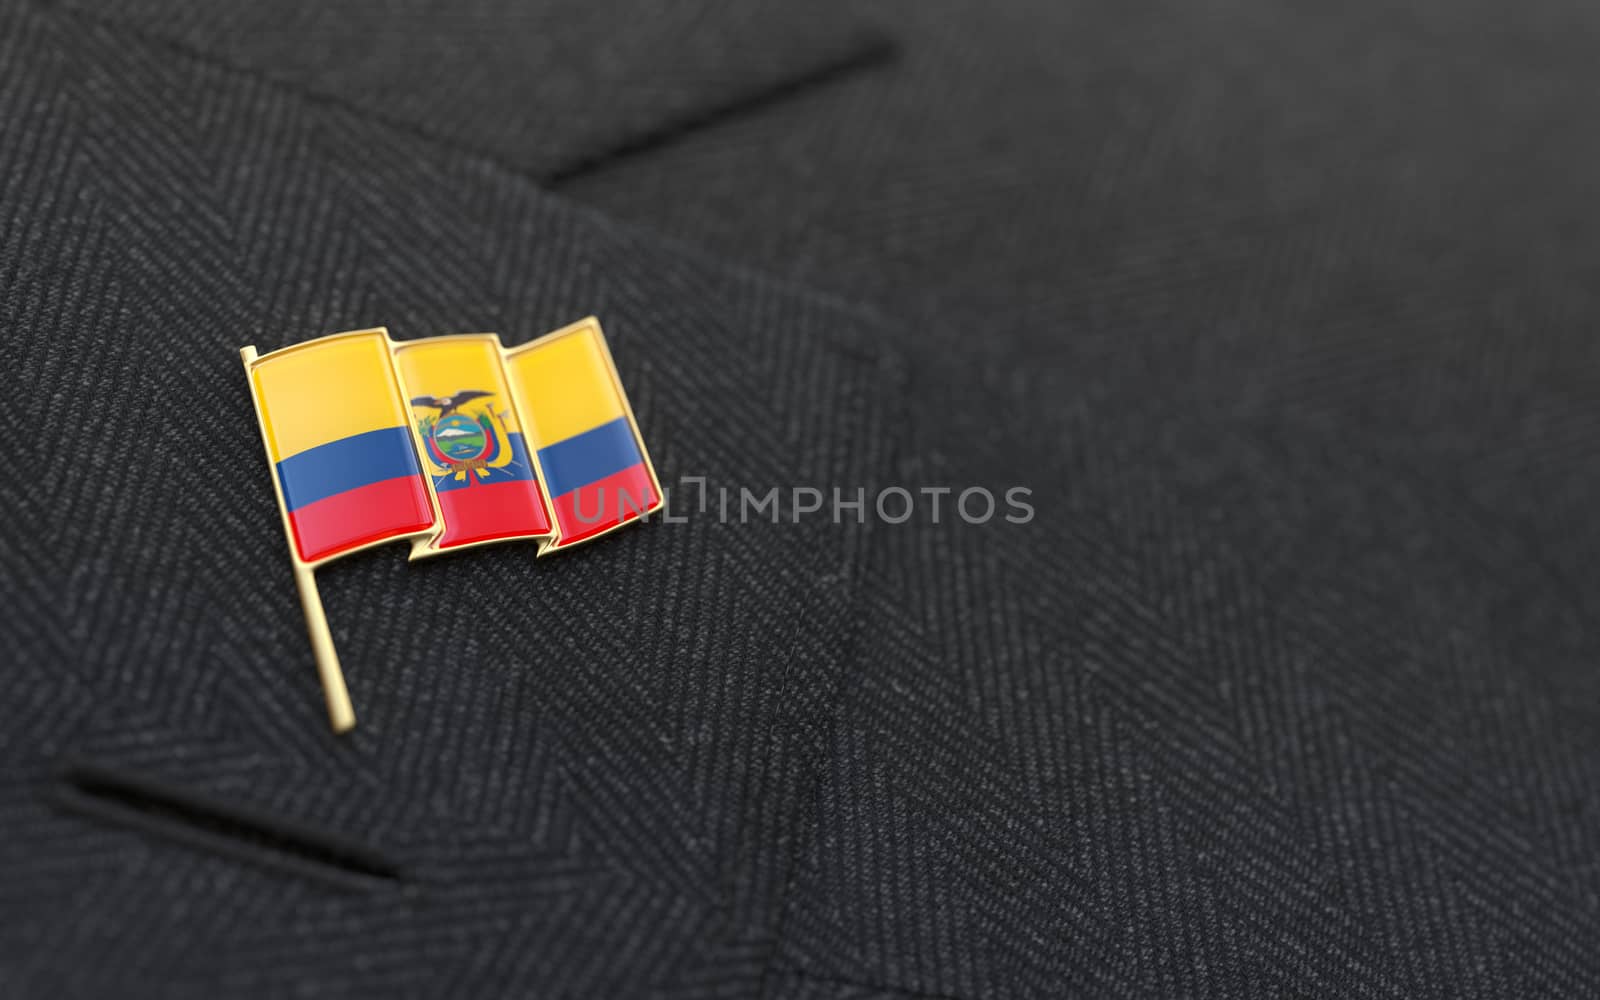 Ecuador flag lapel pin on the collar of a business suit jacket shows patriotism